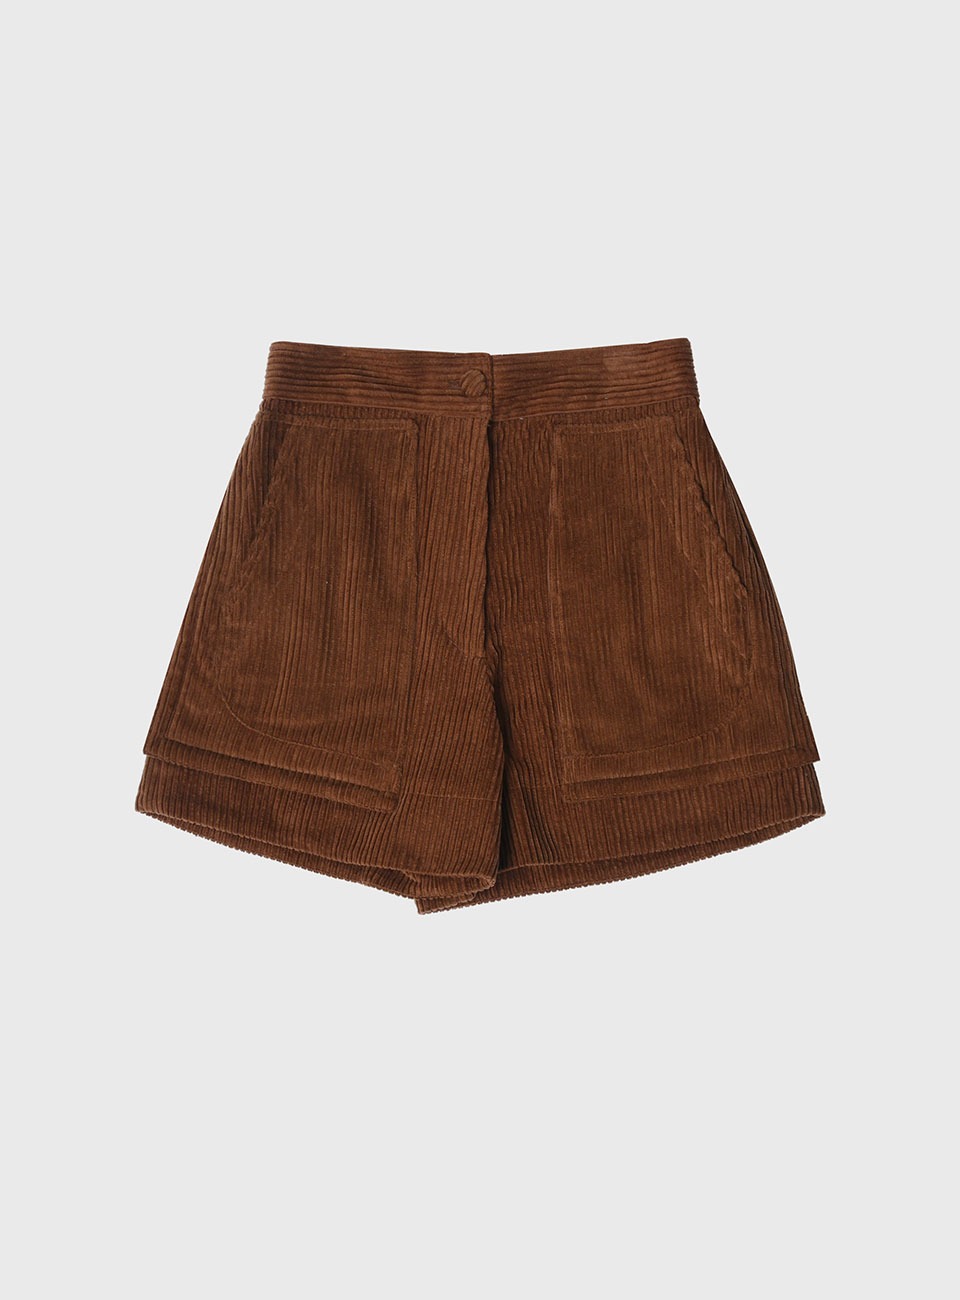 Corduroy shorts (Brown)